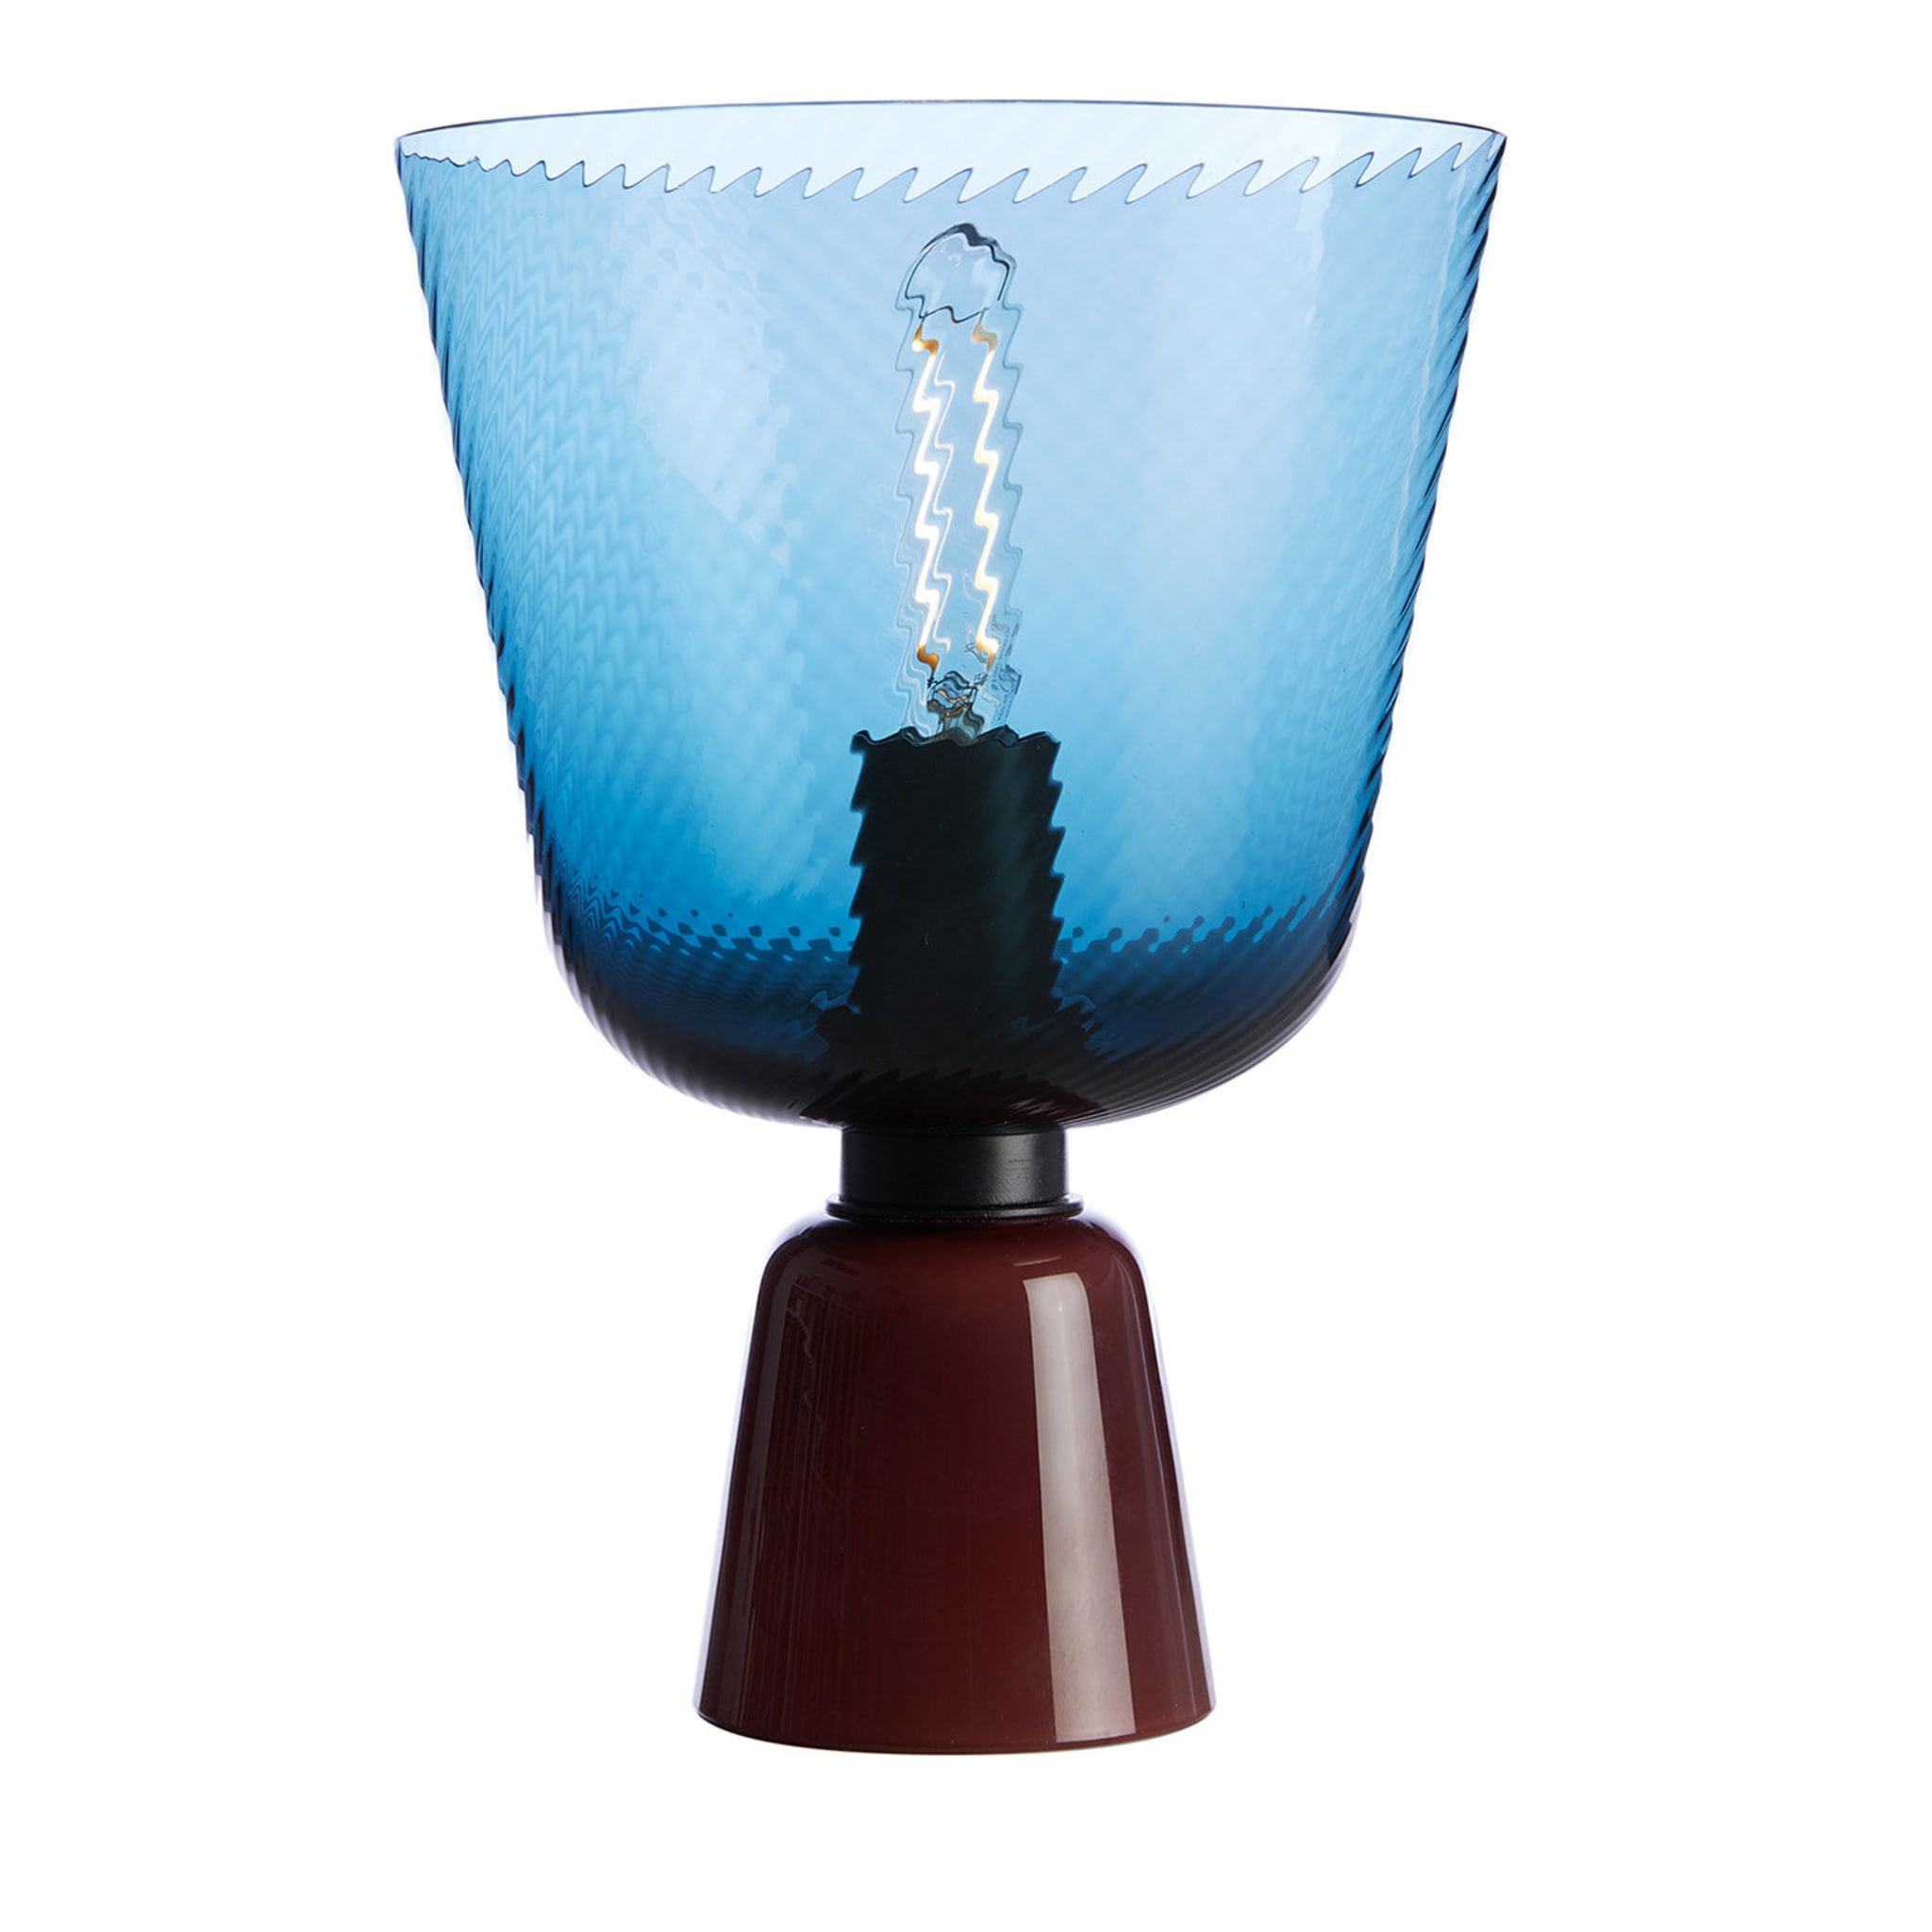 Melting Pot Reverse Petite lampe de table bleue de Matteo Zorzenoni - Vue principale